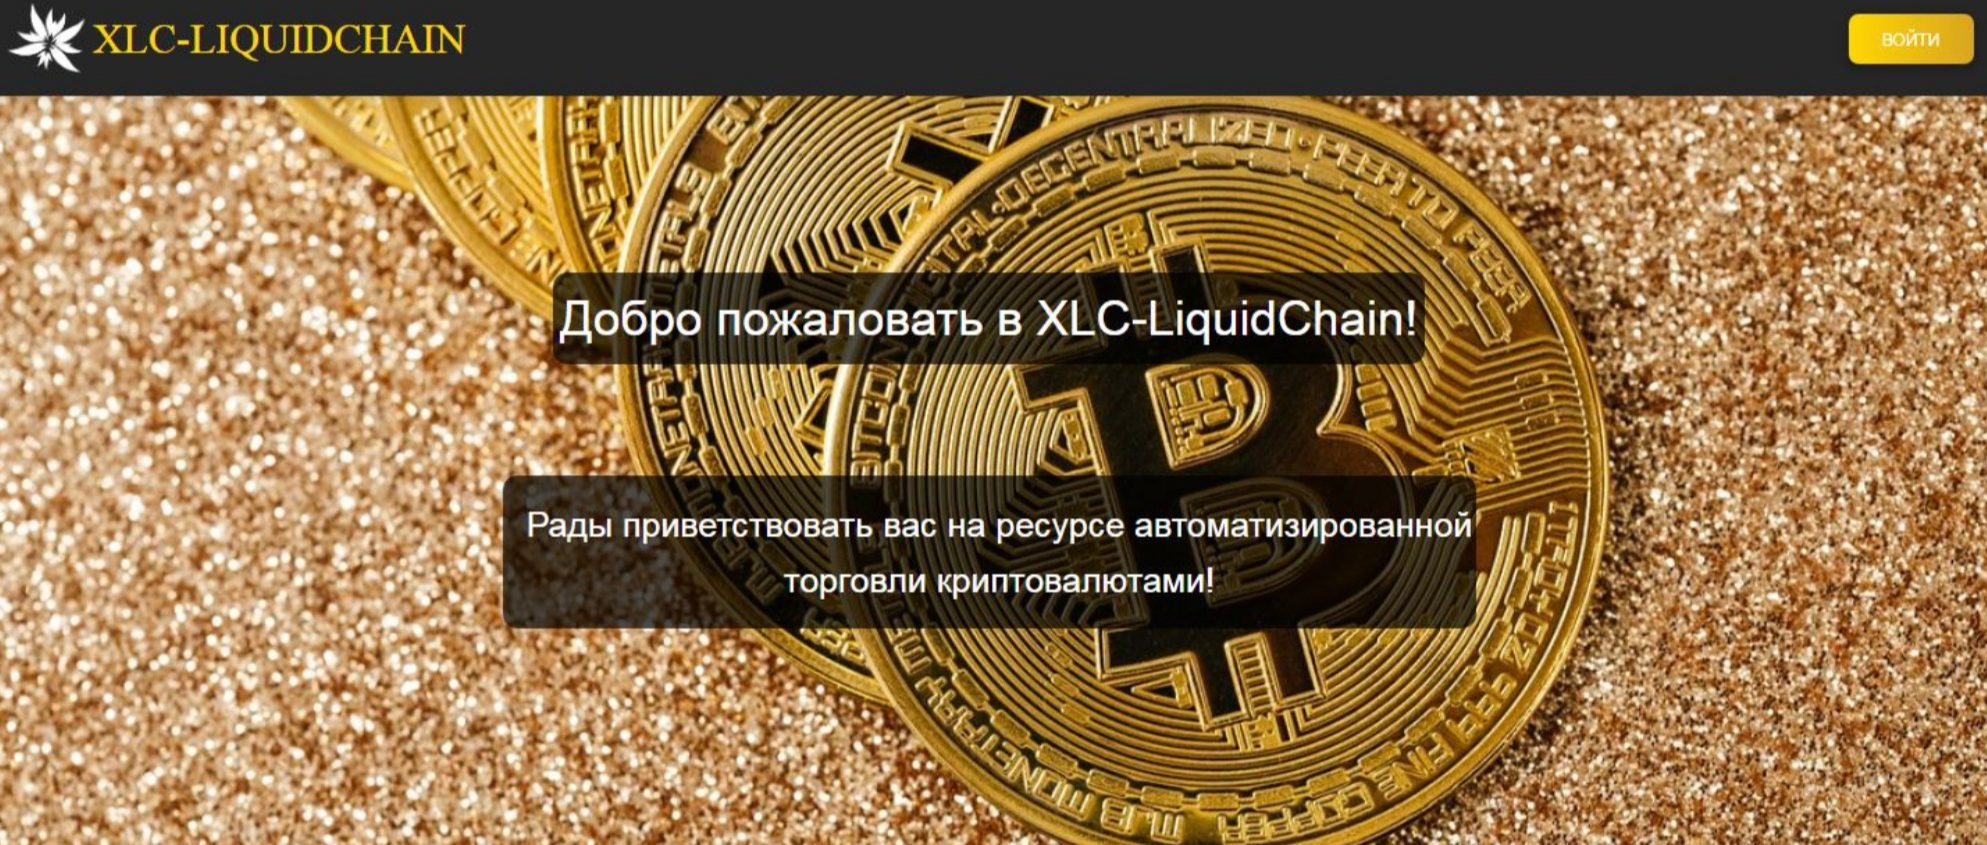 Xlc Liquidchain сайт